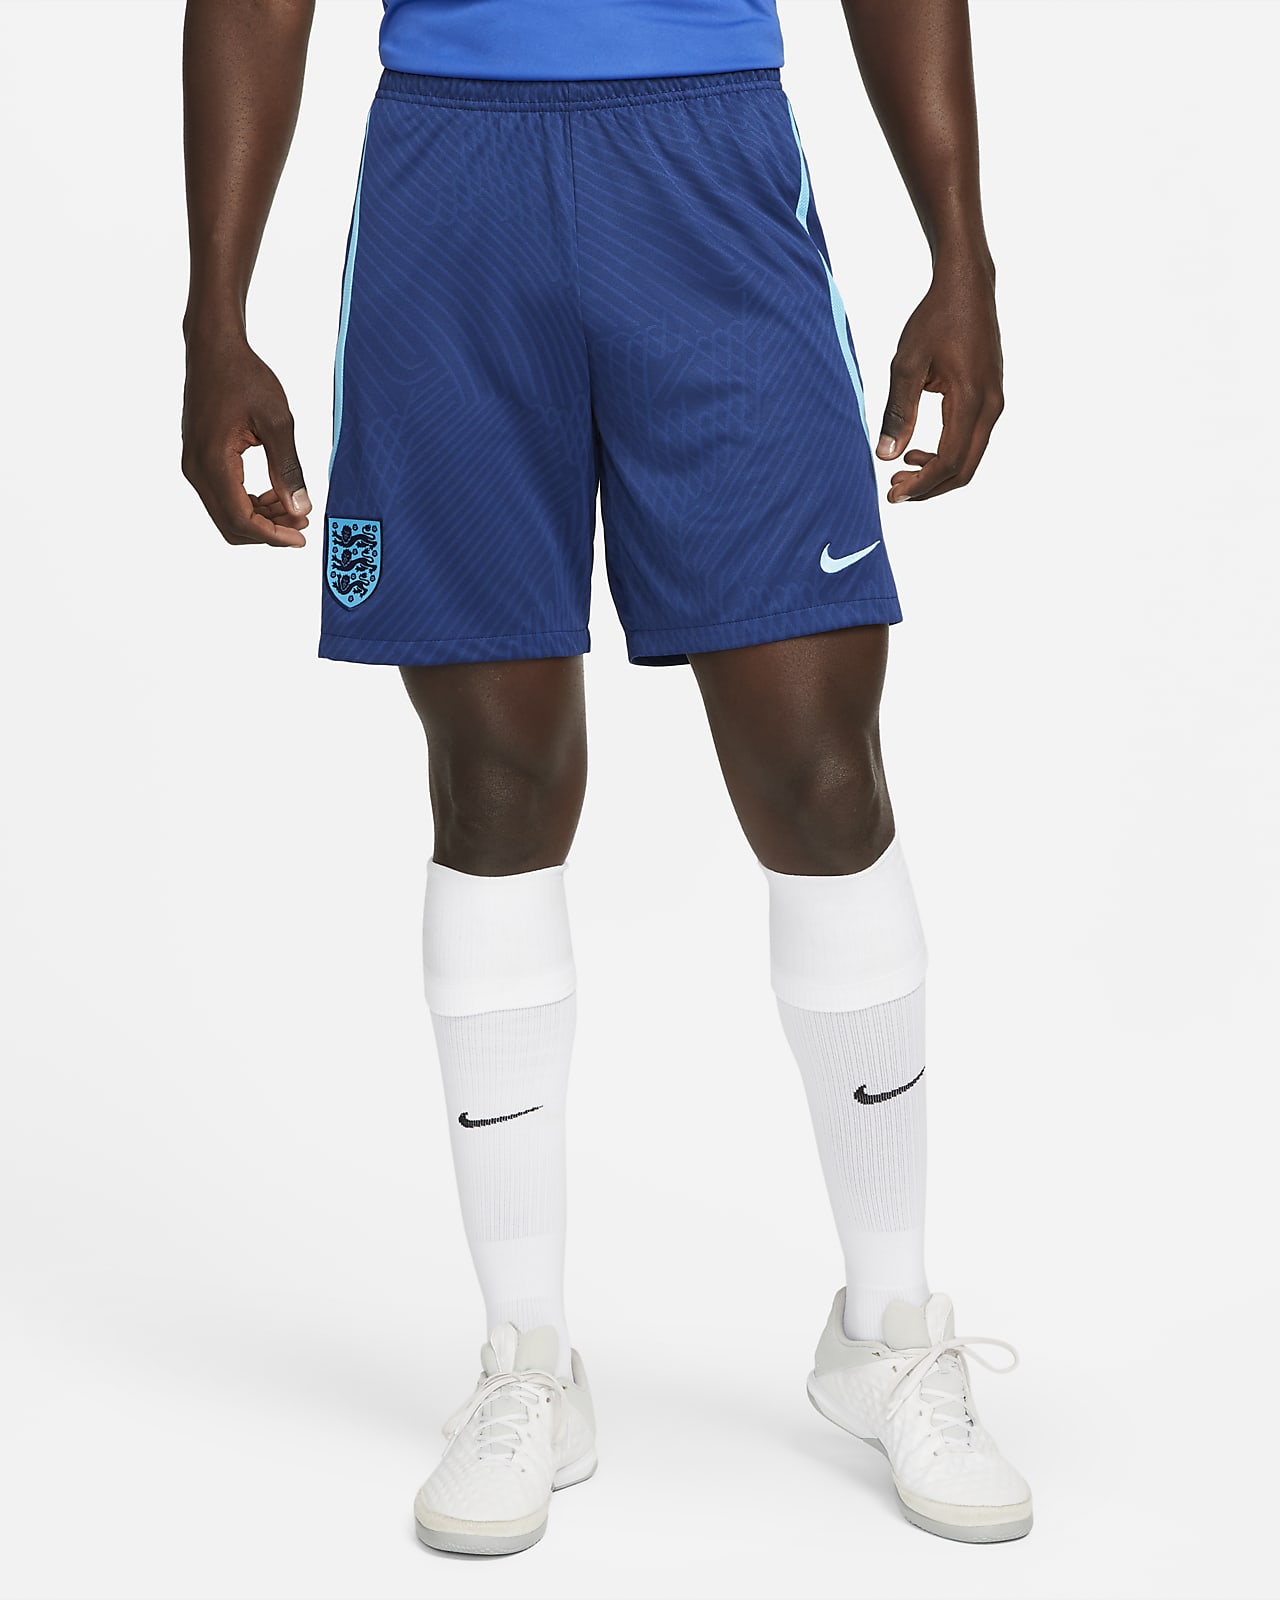 England Strike Men's Nike Dri-FIT Knit Football Shorts